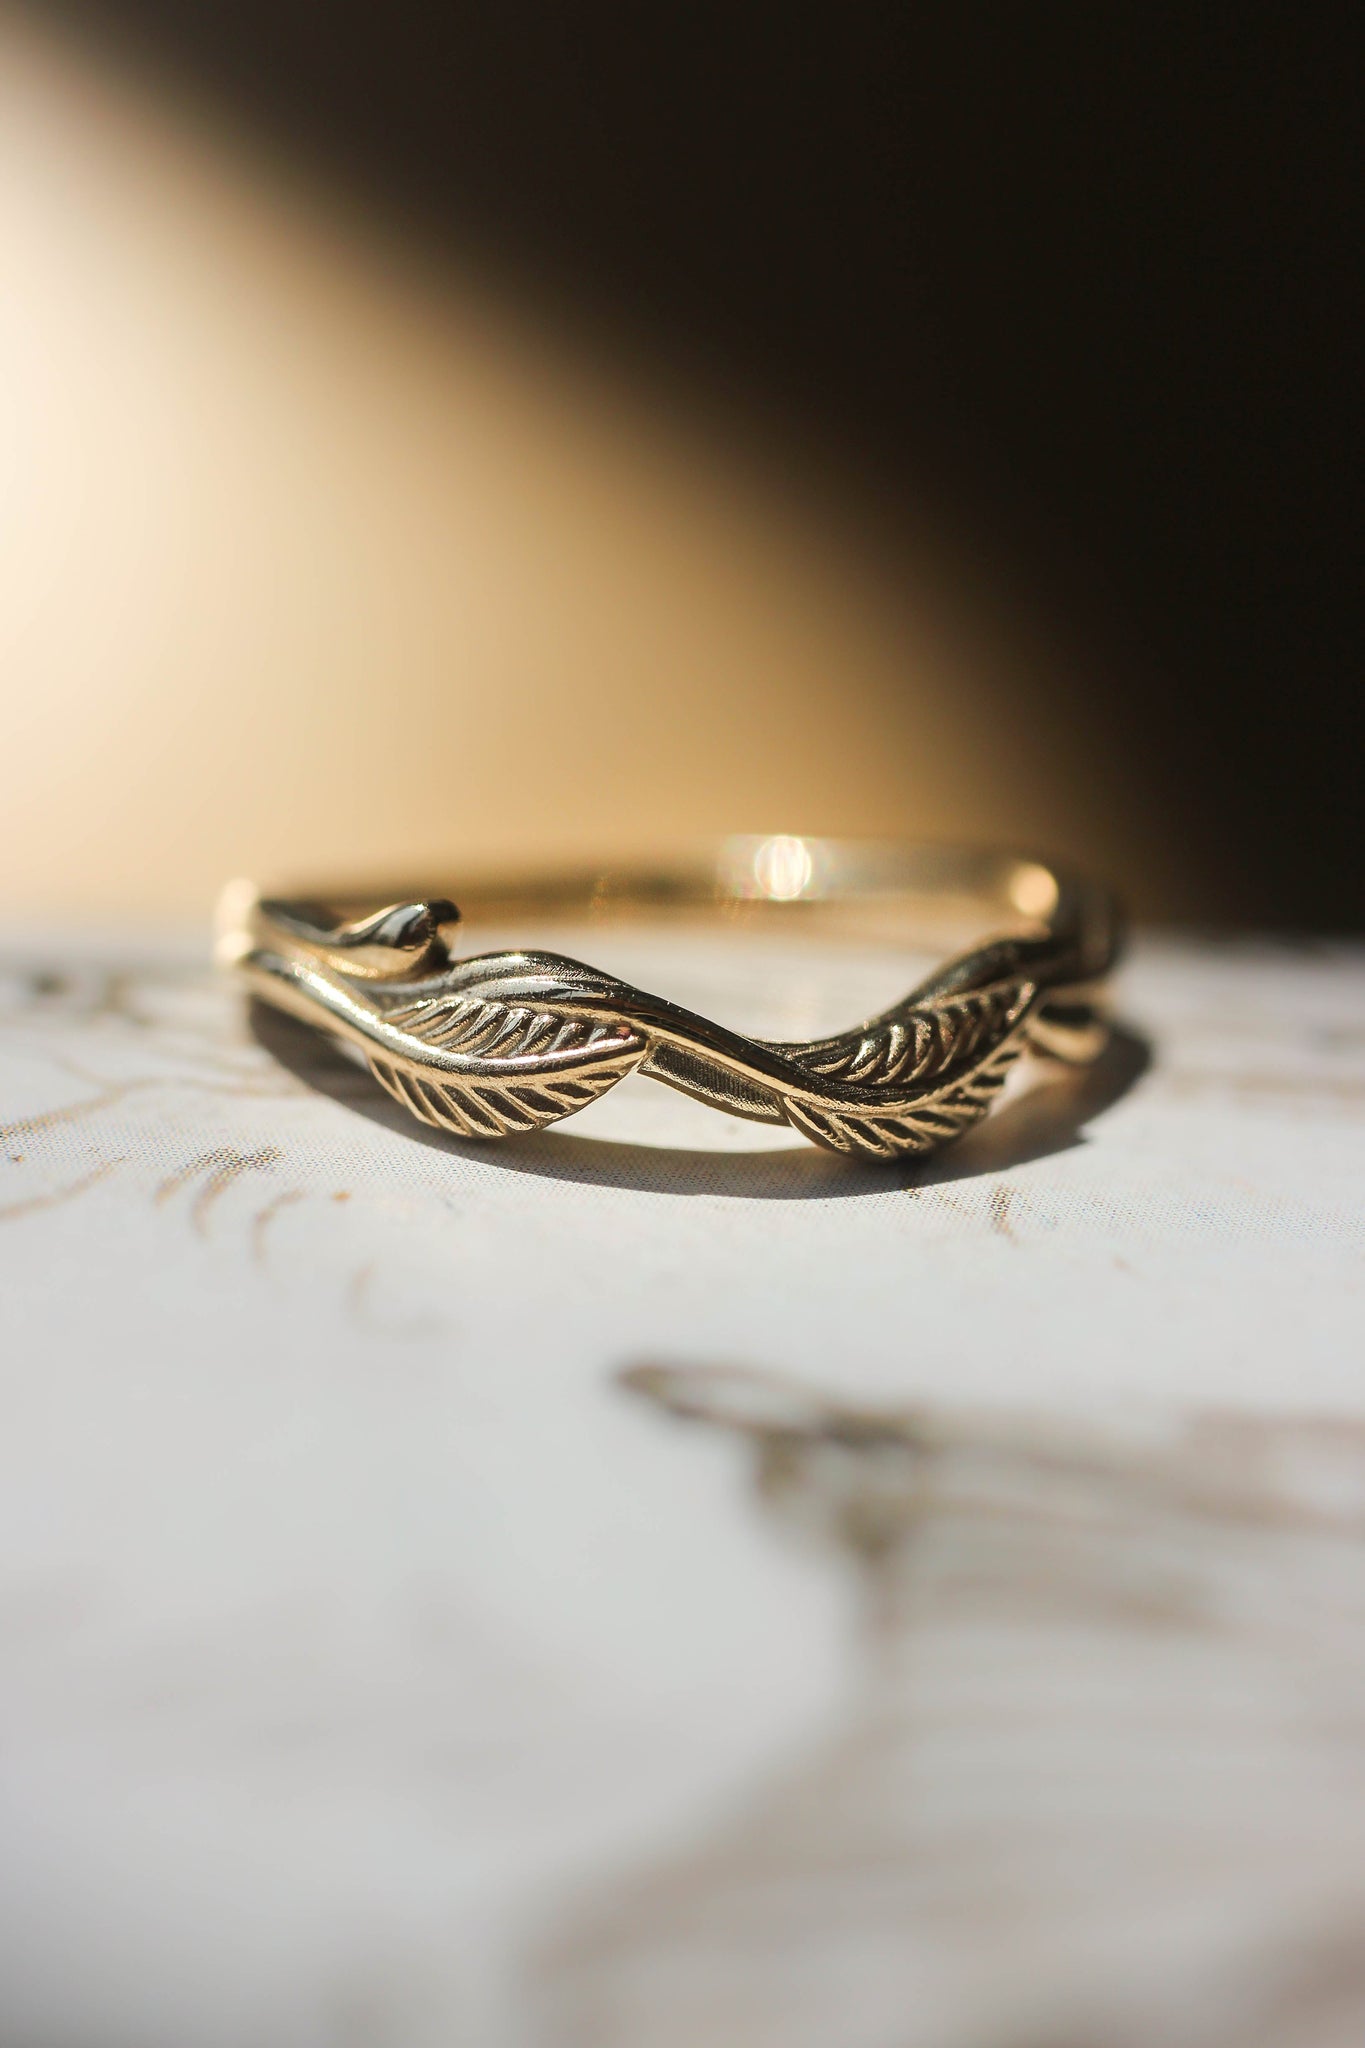 Twig wedding ring, matching band for Azalea - Eden Garden Jewelry™